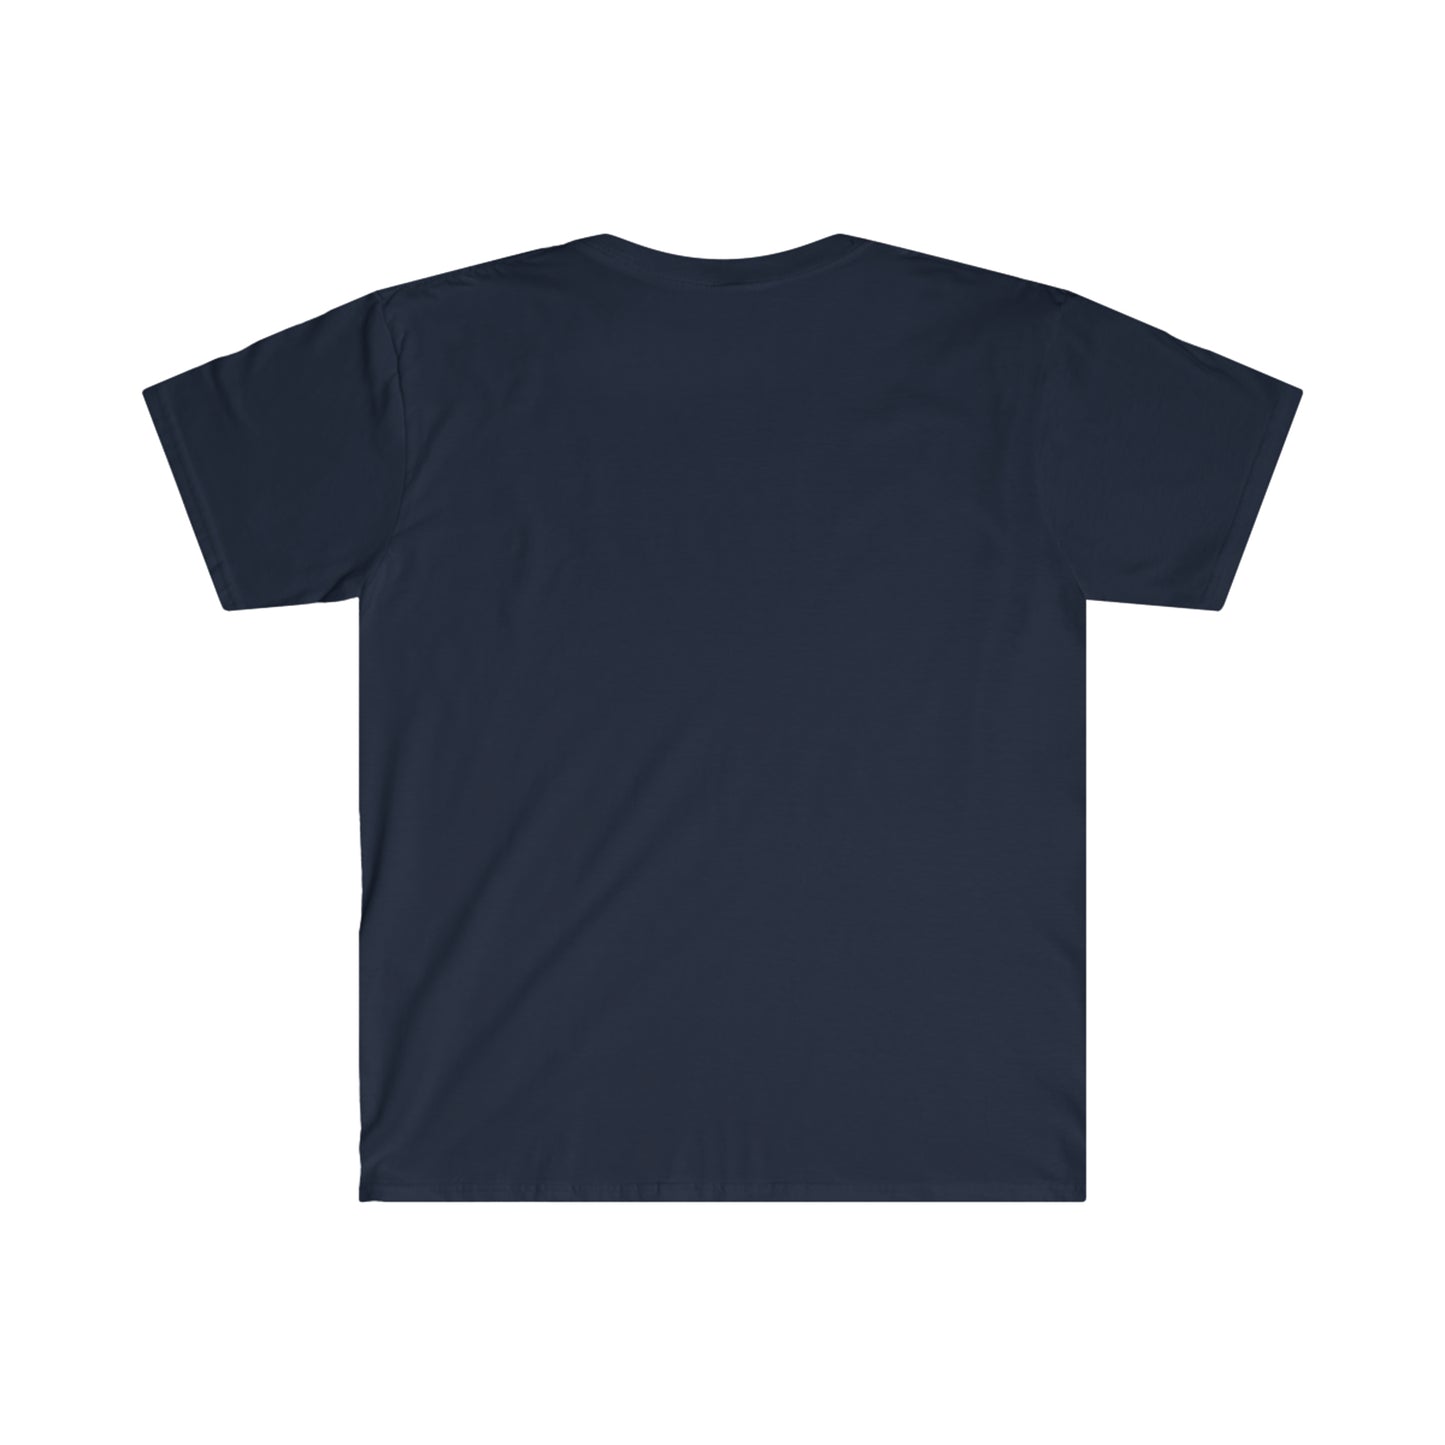 THE .300 BLACKOUT Unisex Softstyle T-Shirt